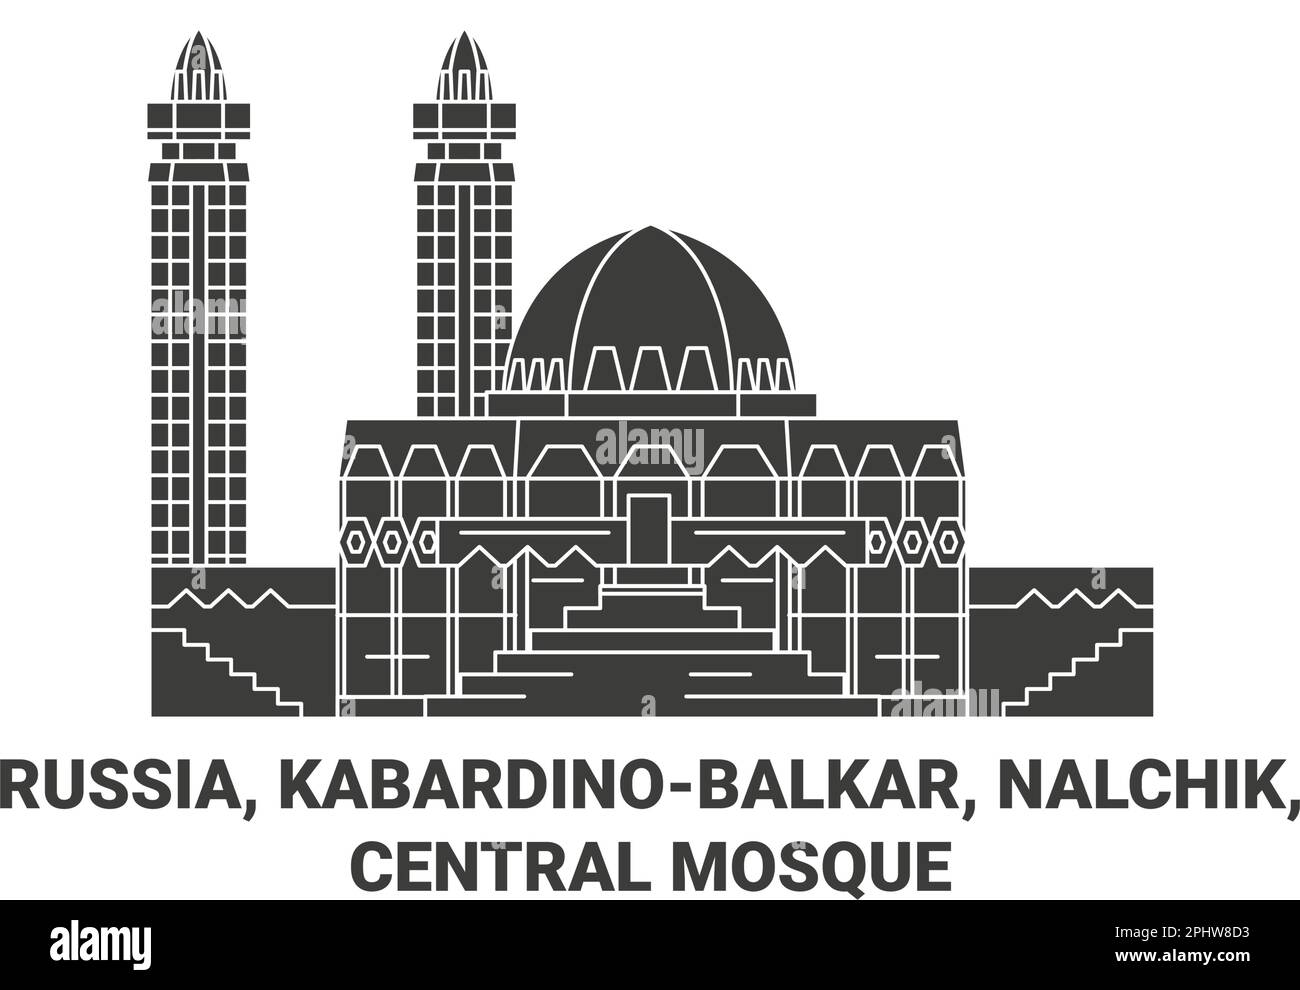 Russie, Kabardinobalkar, Nalchik, Mosquée centrale, illustration du vecteur de voyage Illustration de Vecteur